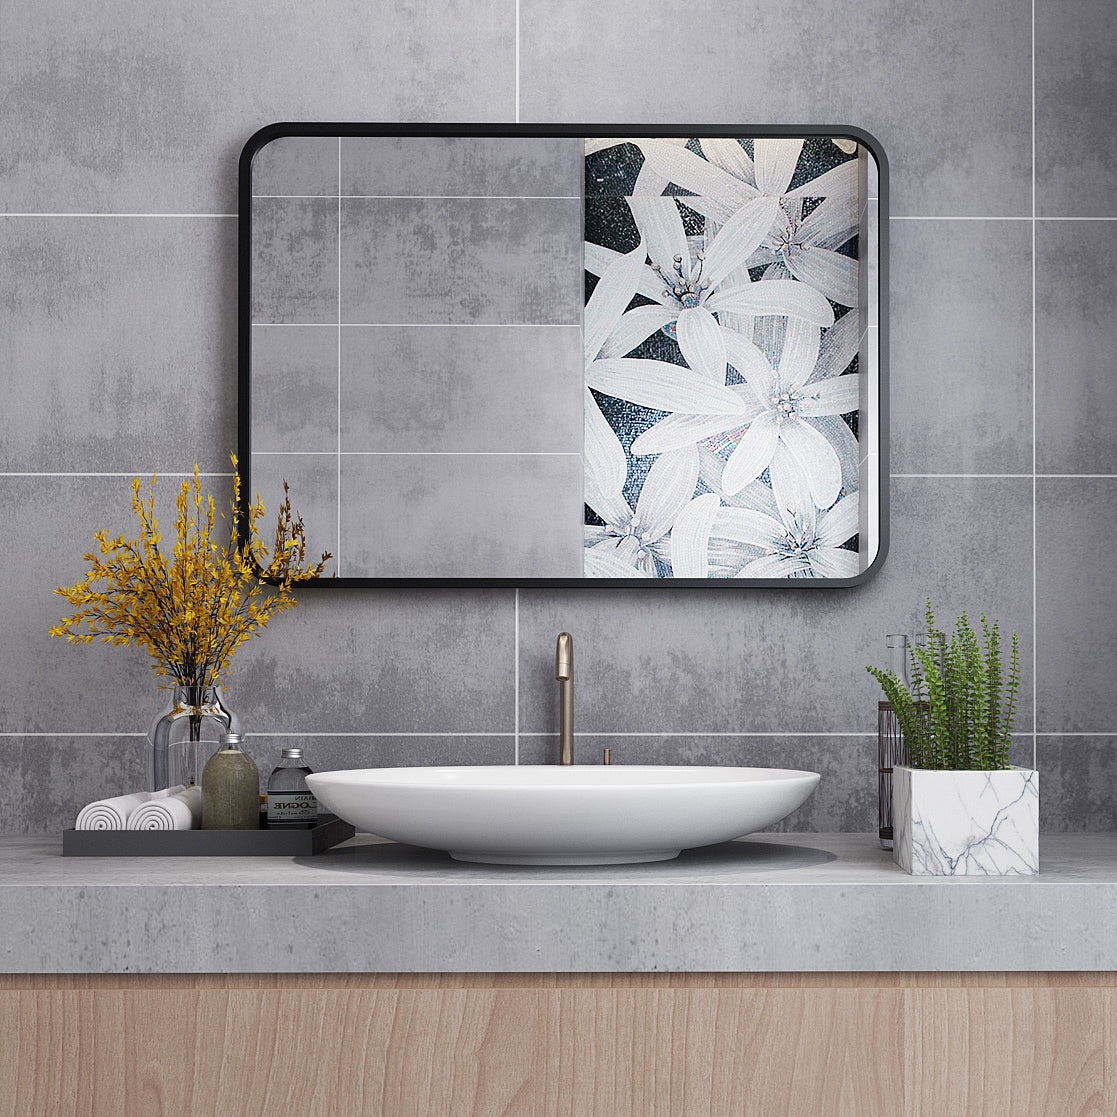 LED Badspiegel – miqu sanitary